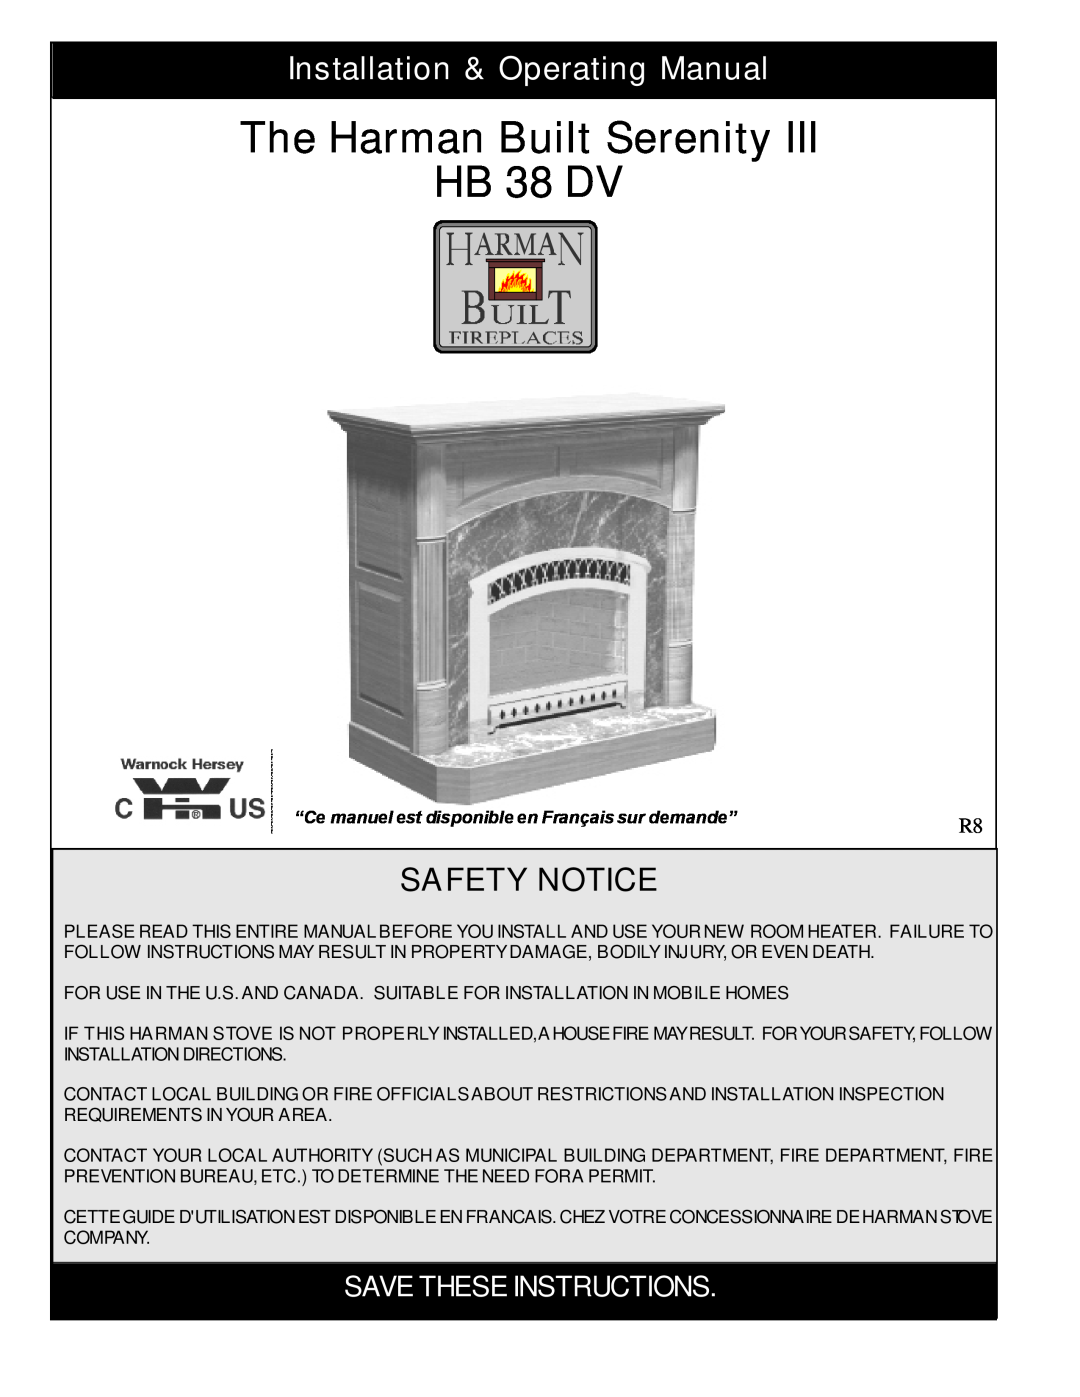 Harman Stove Company manual Safety Notice, The Harman Built Serenity HB 38 DV, Installation & Operating Manual 